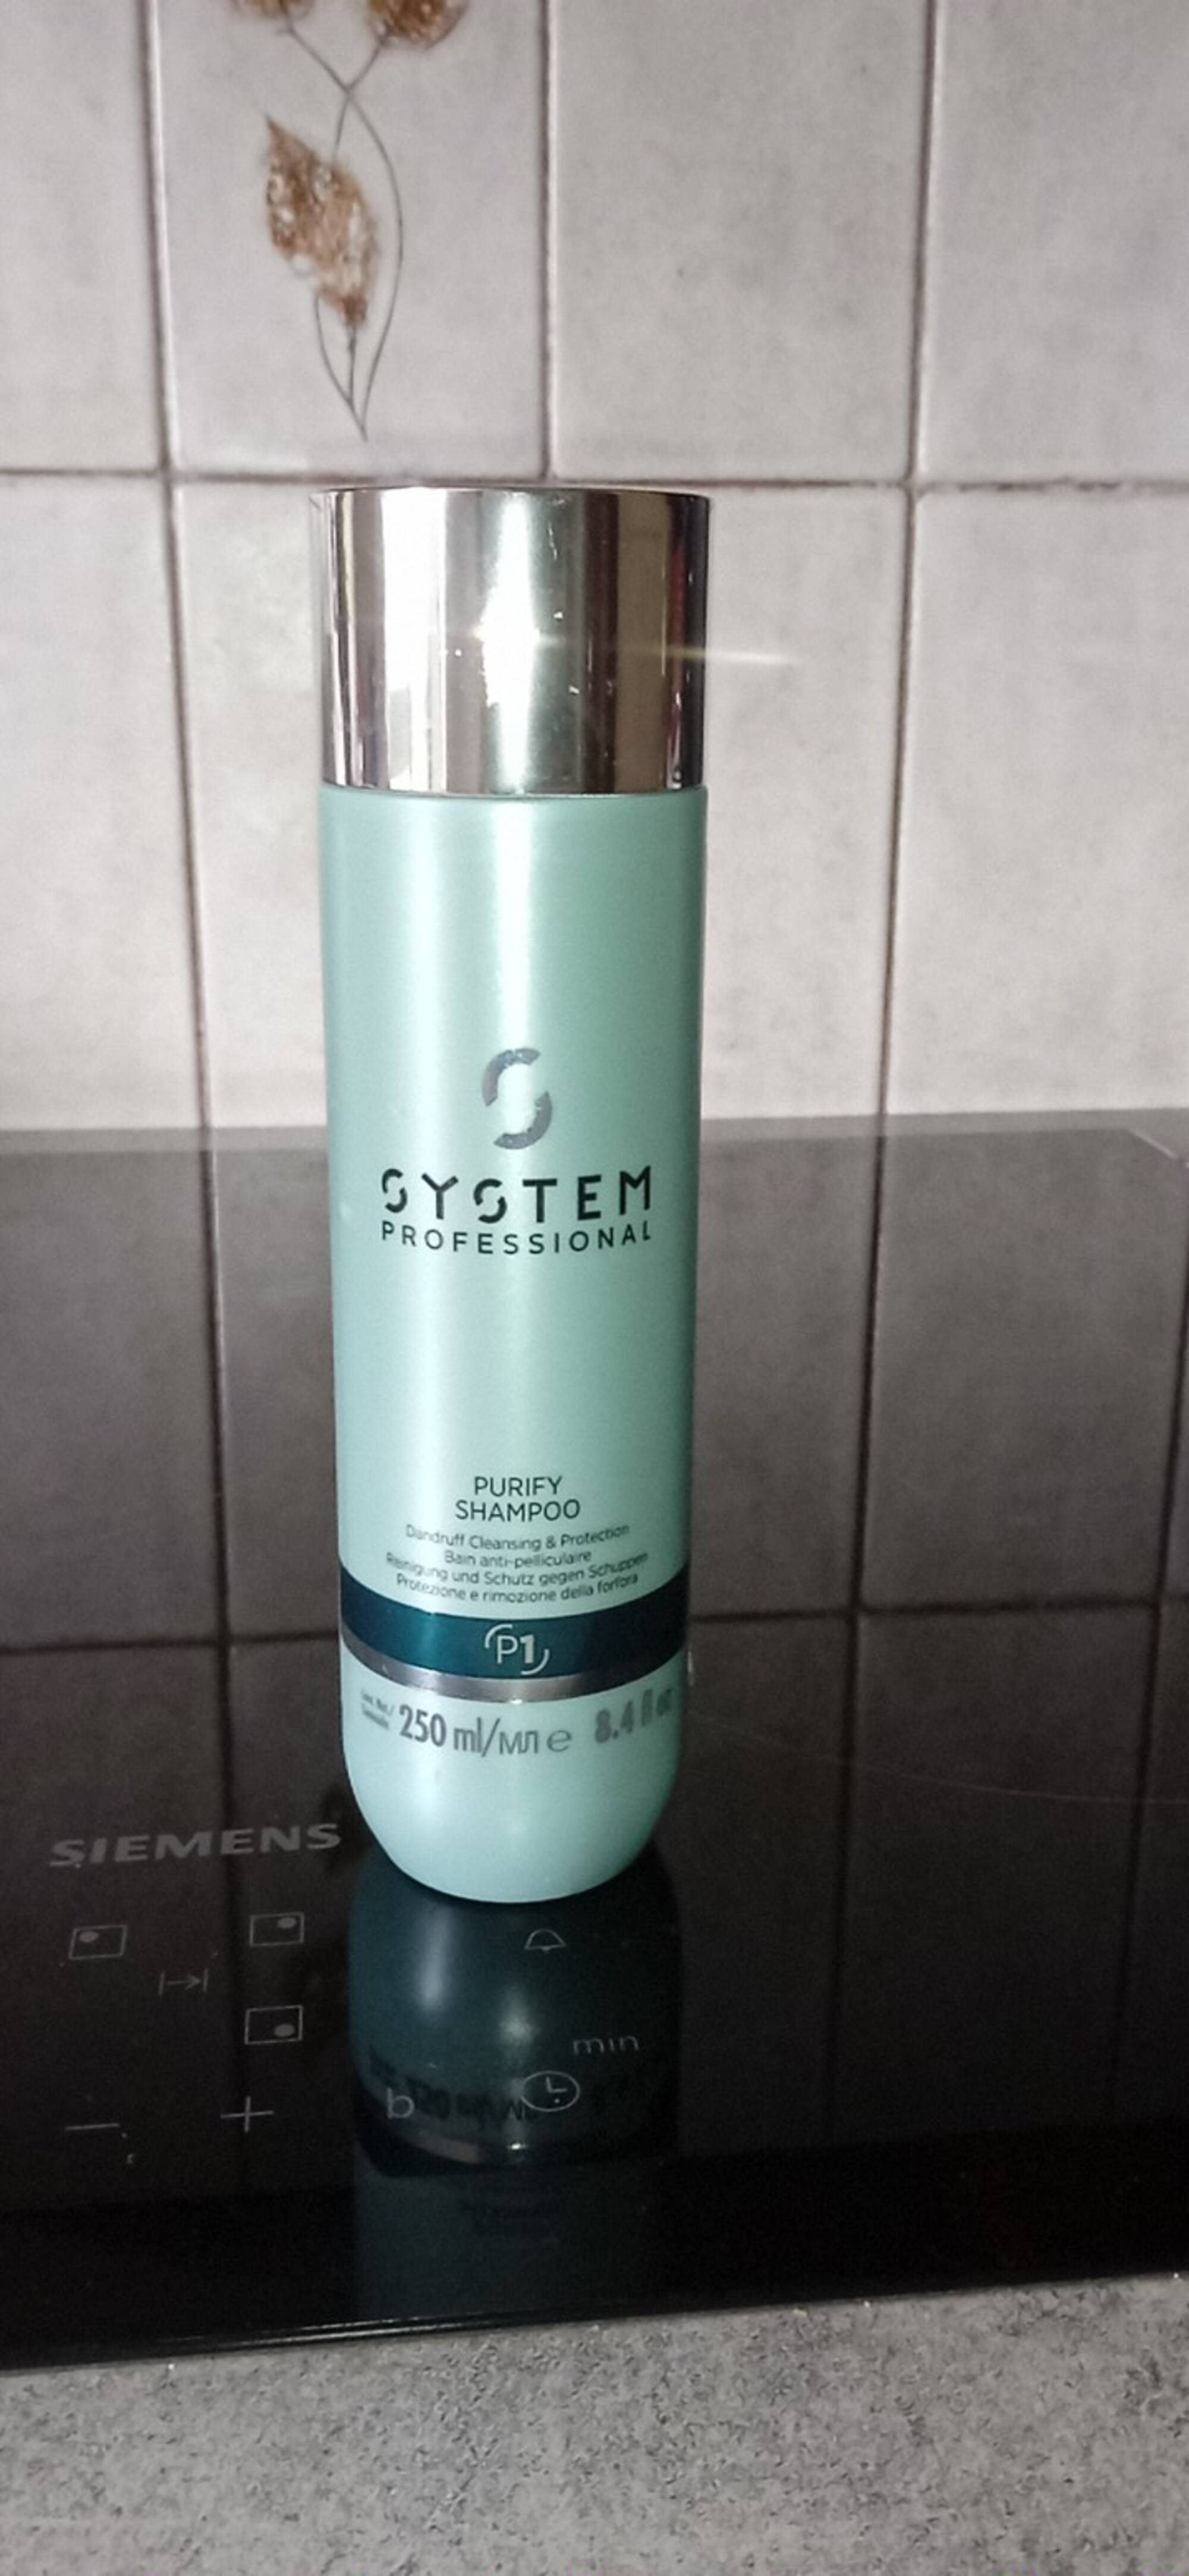 SYSTEM PROFESSIONAL - Purify shampoo